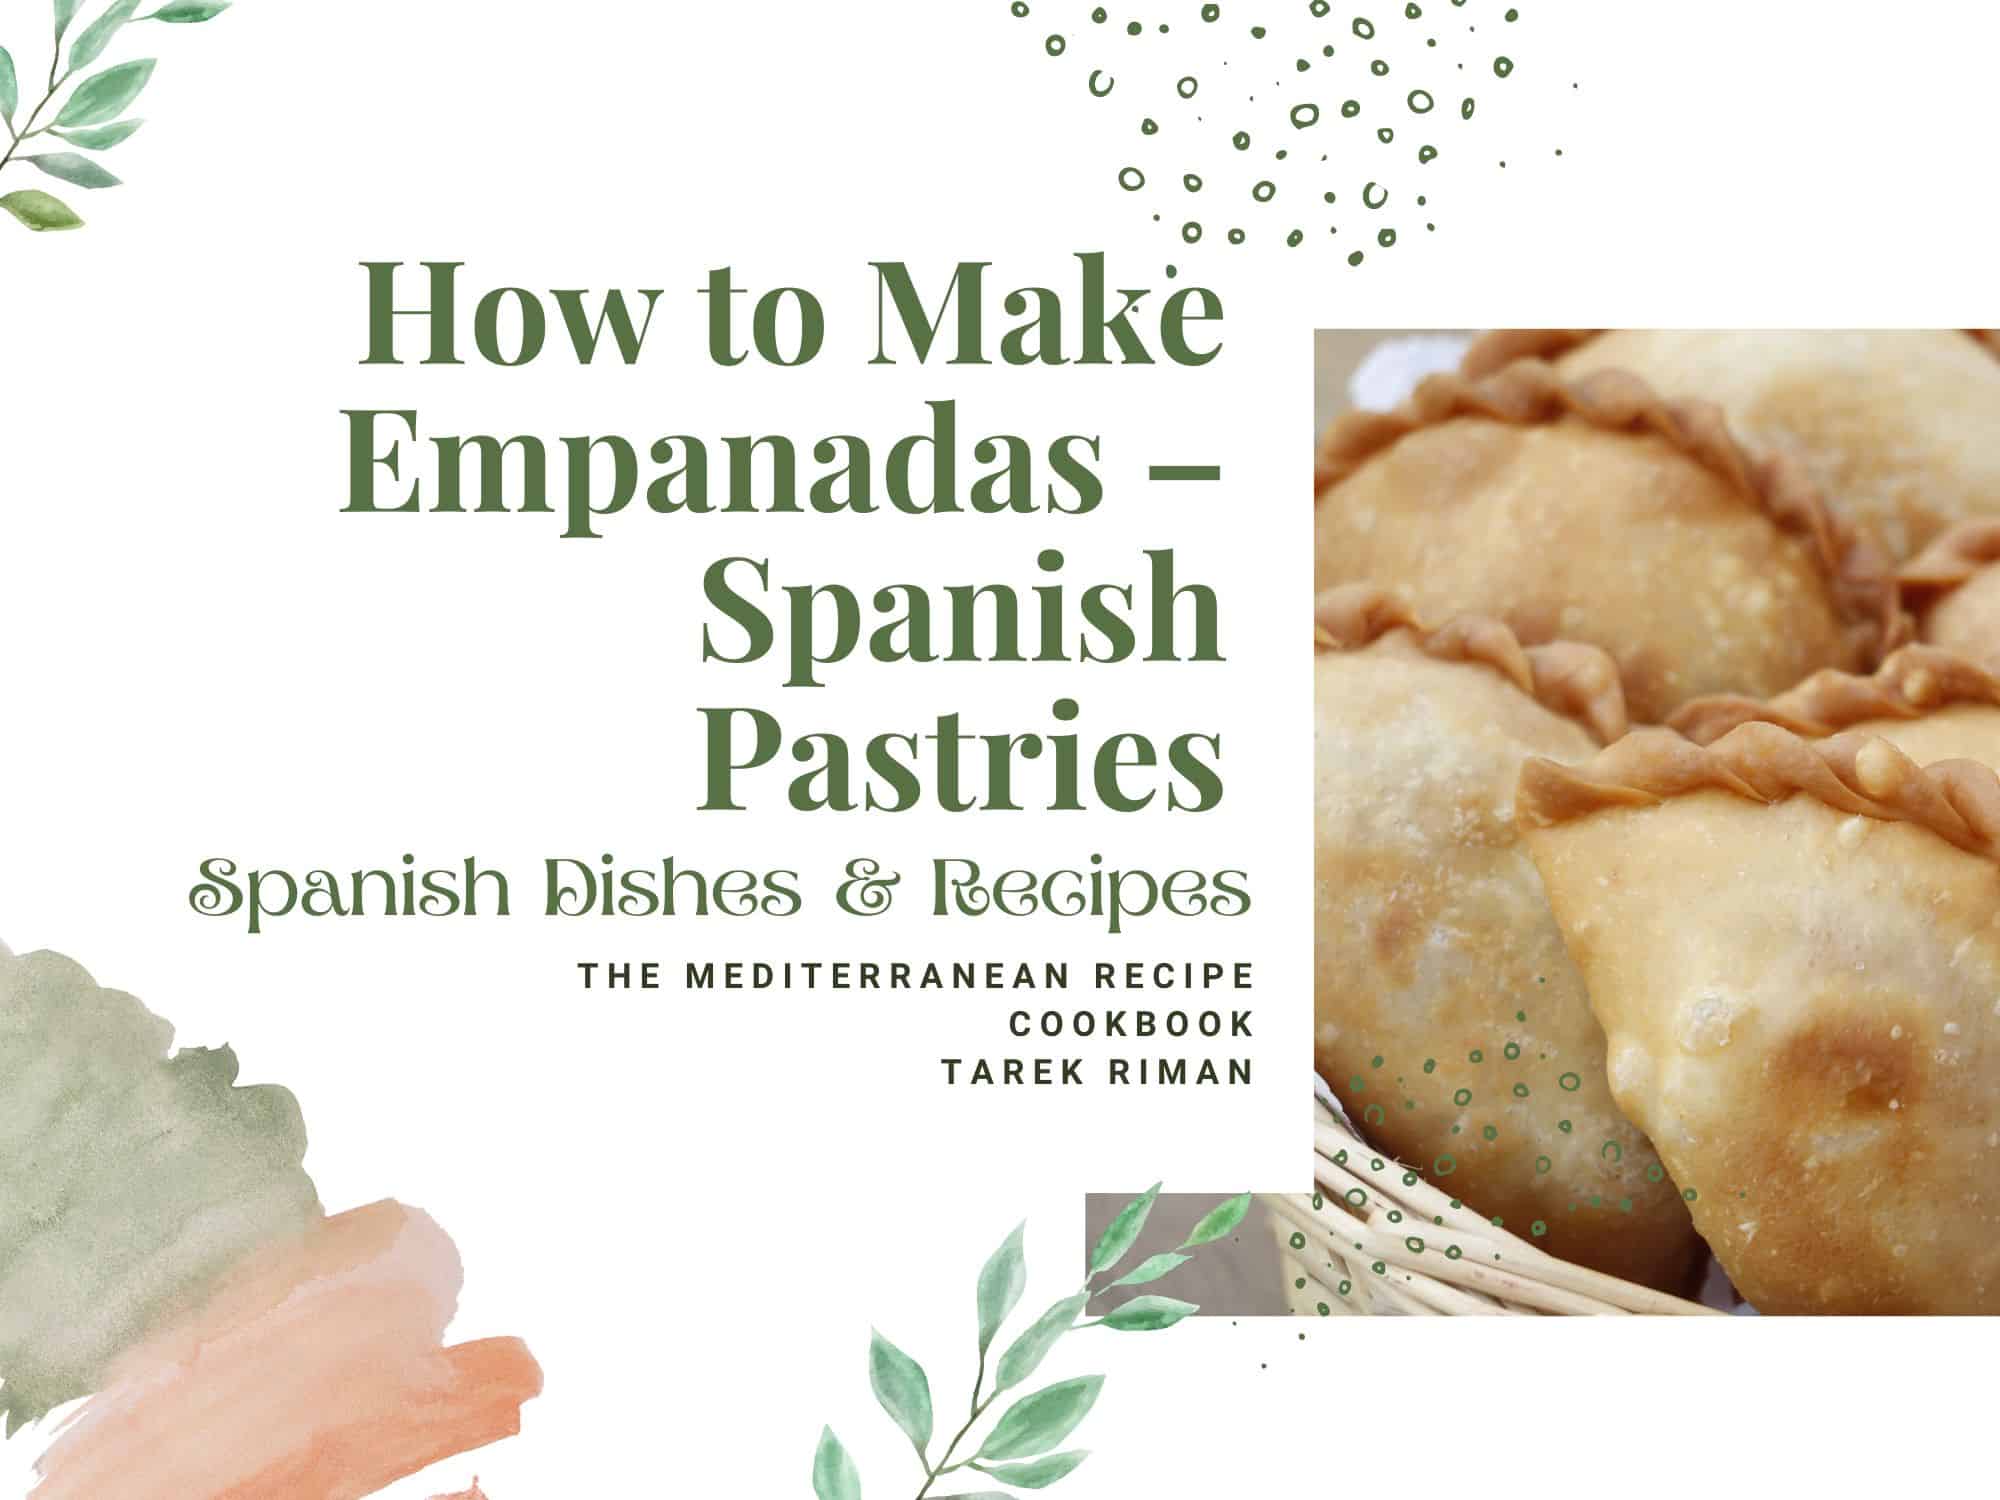 How to Make Empanadas – Spanish Pastries